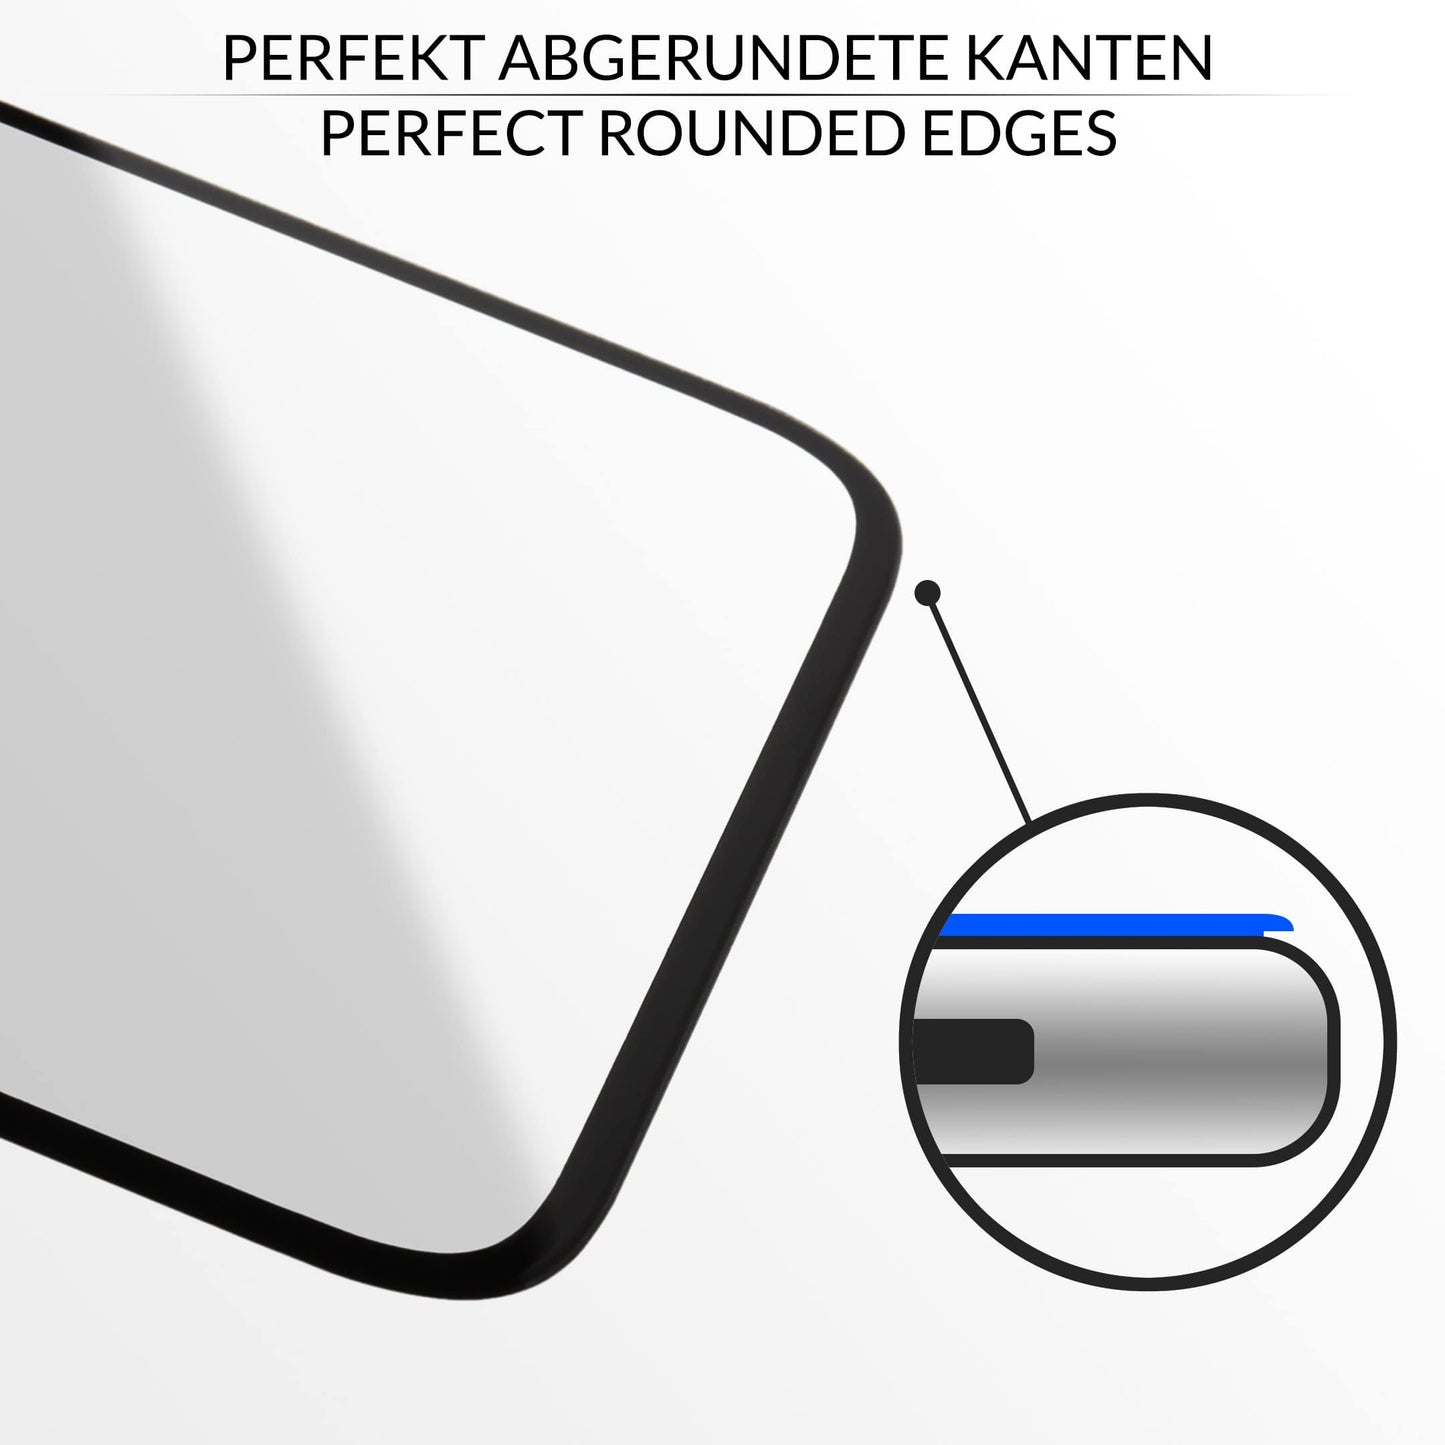 iPhone 12 Pro - cristal de zafiro